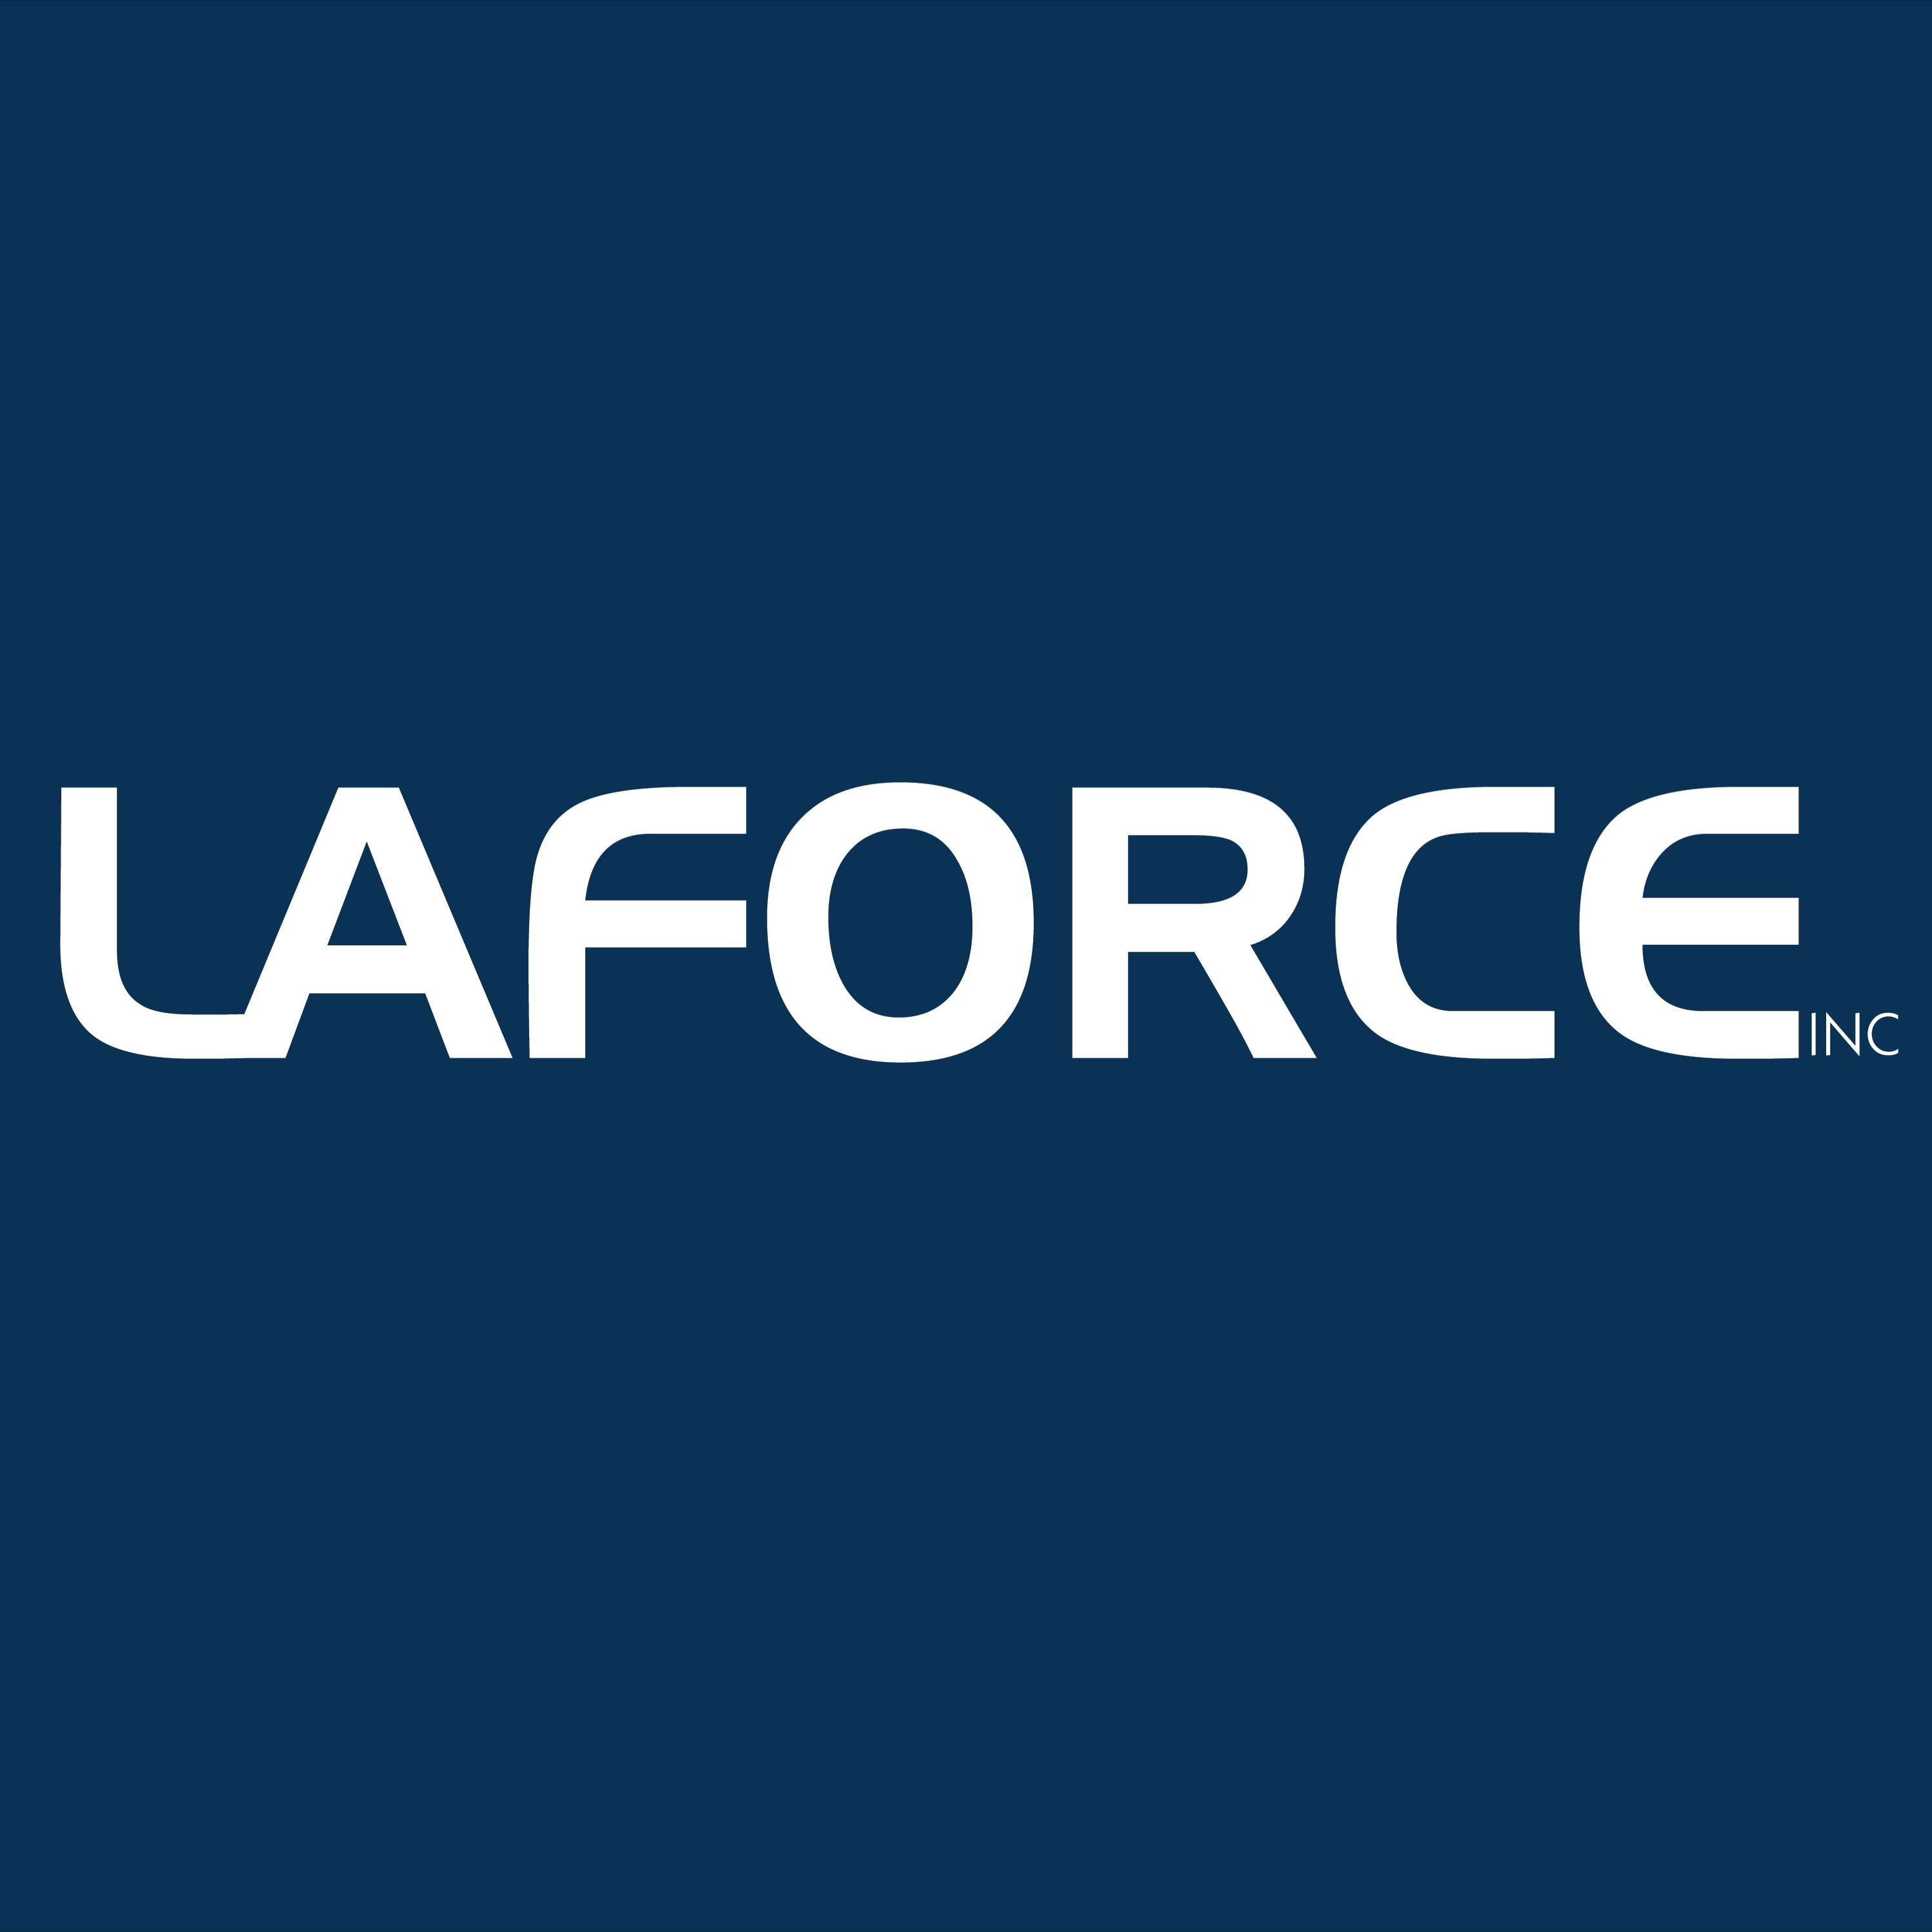 LaForce, Inc Green Bay (800)236-8858